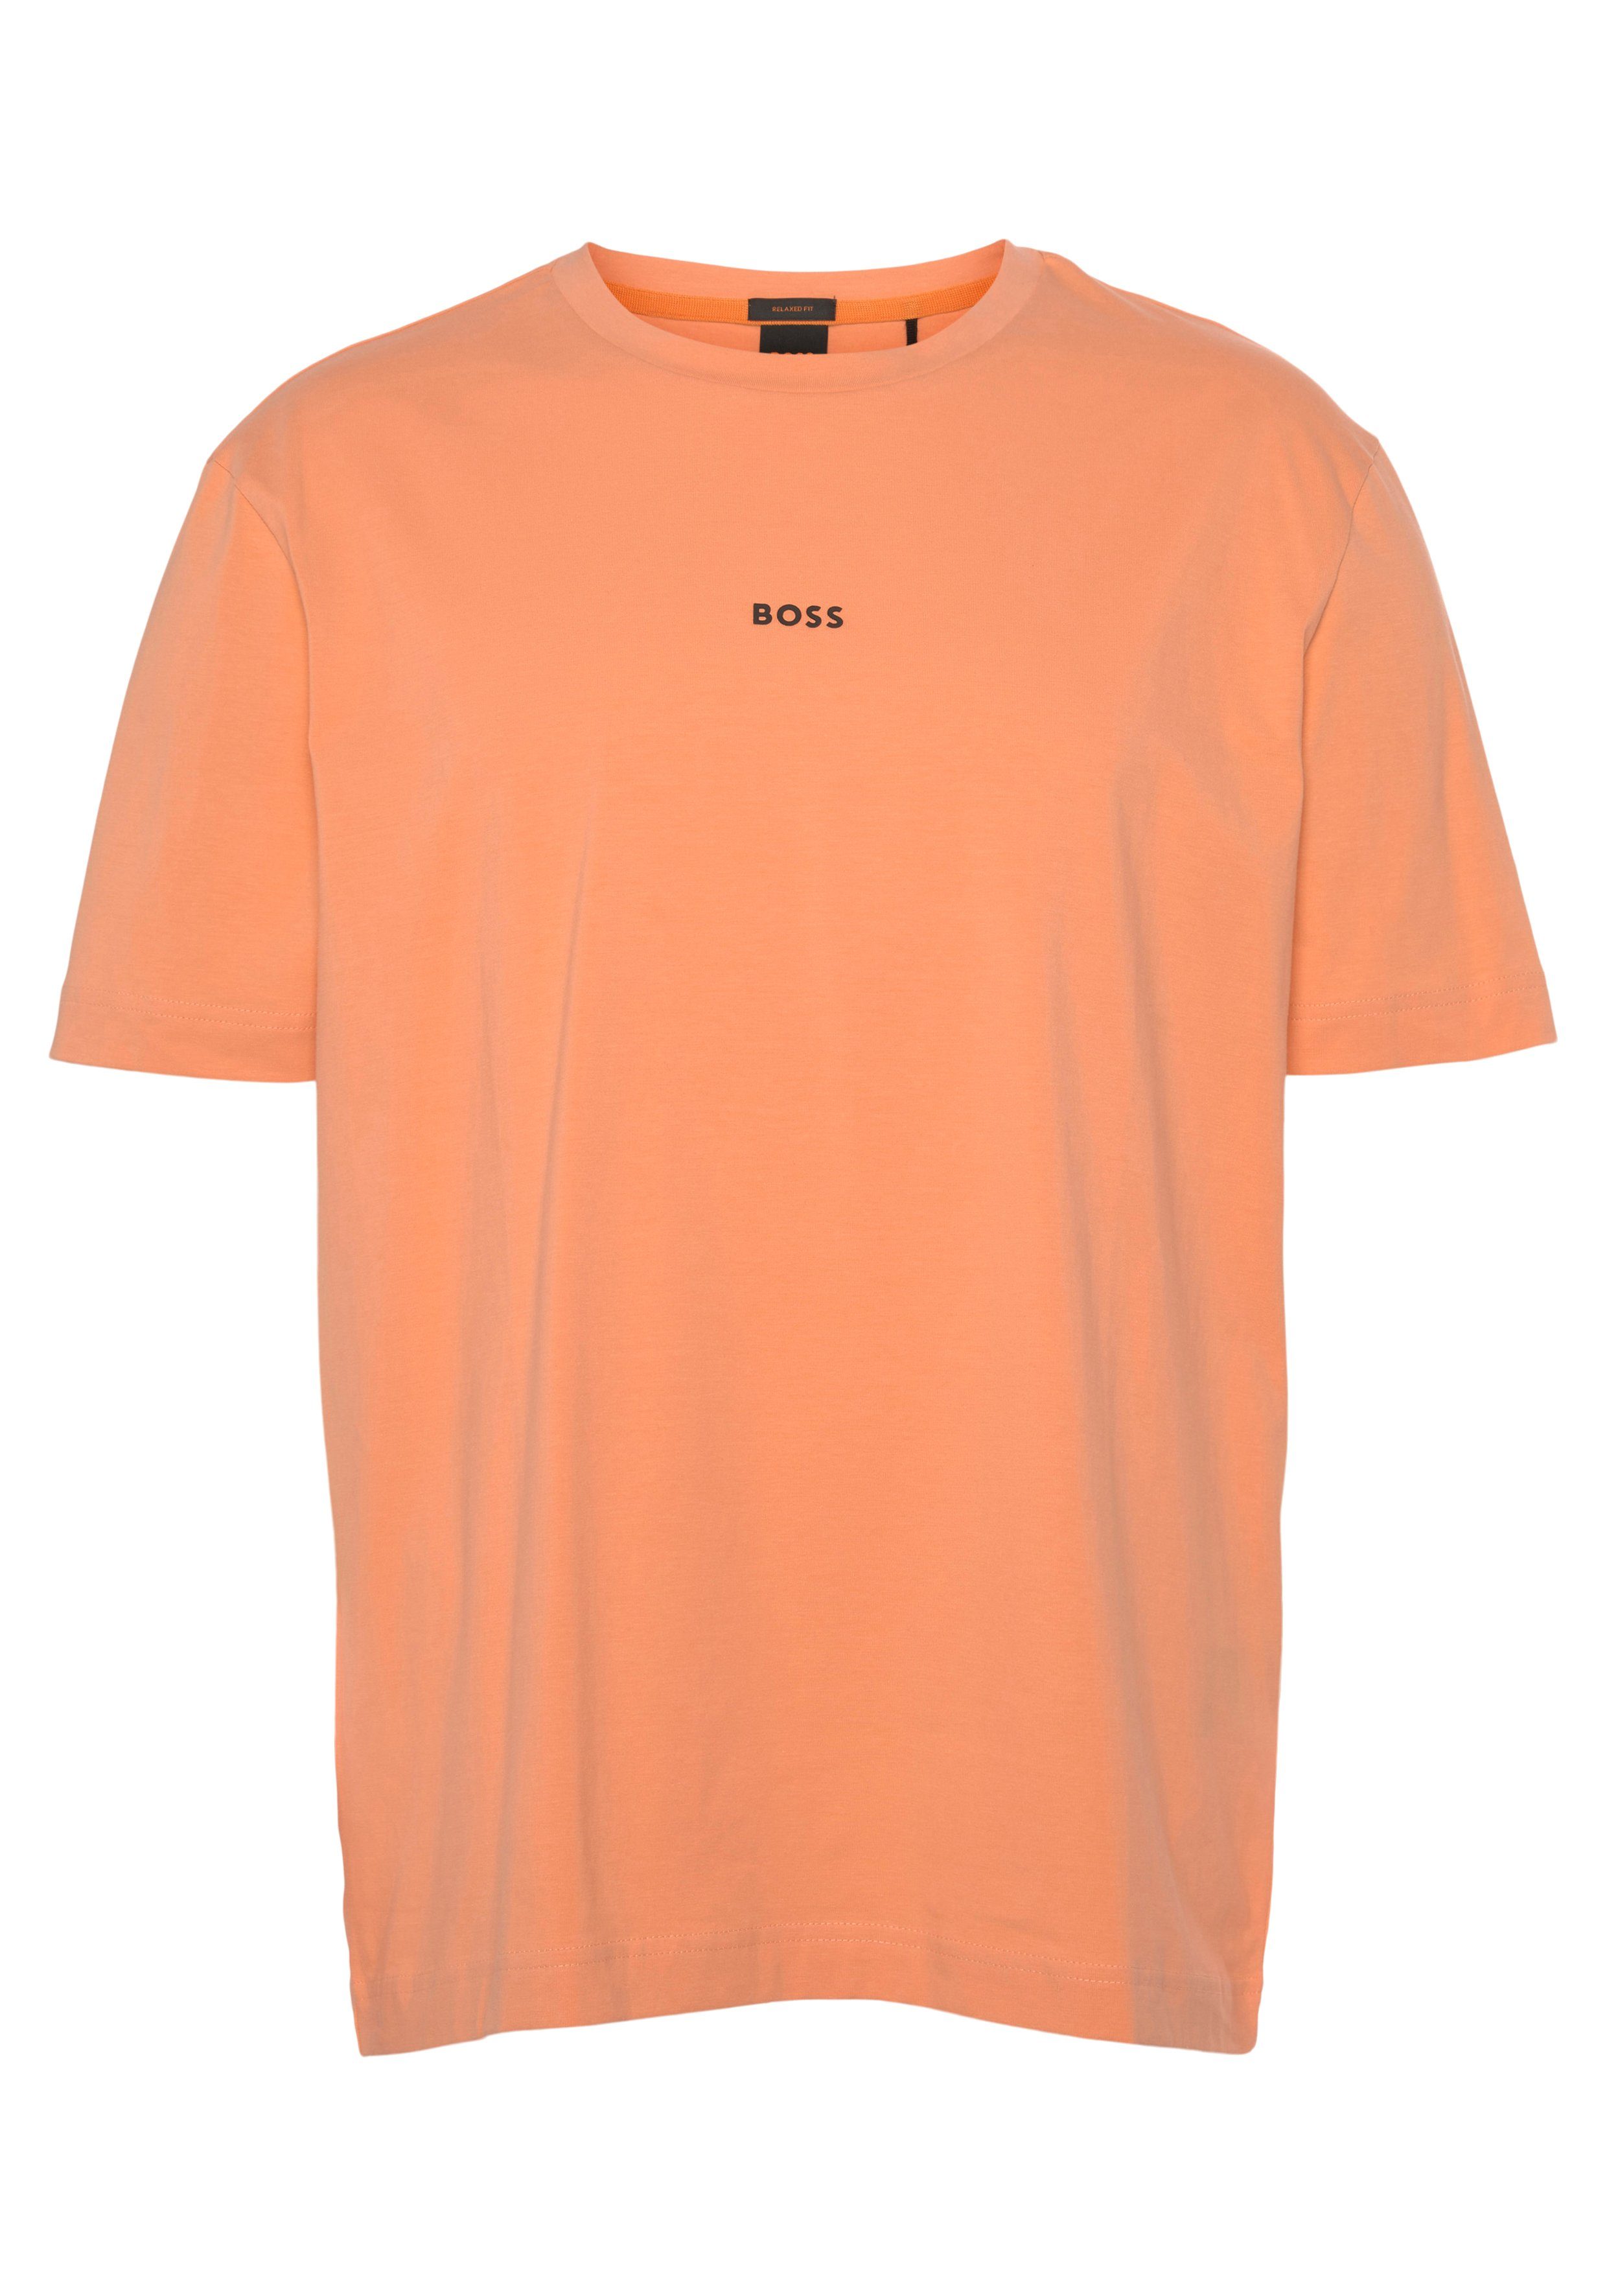 BOSS ORANGE Kurzarmshirt TChup mit BOSS-Logodruck auf der Brust light/Pastel_orange